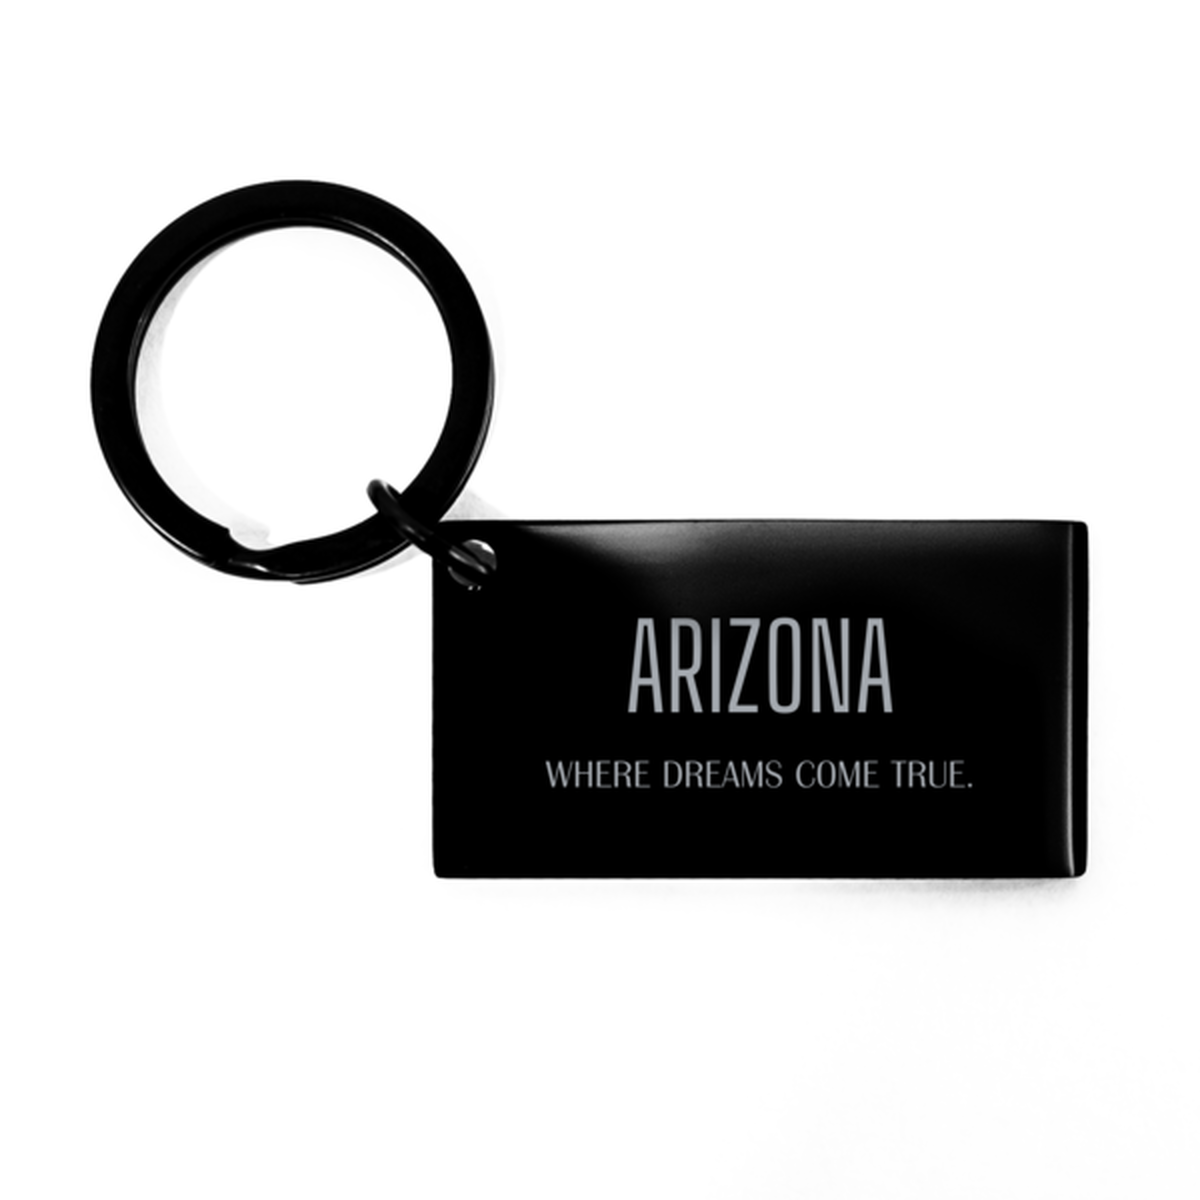 Love Arizona State Keychain, Arizona Where dreams come true, Birthday Inspirational Gifts For Arizona Men, Women, Friends